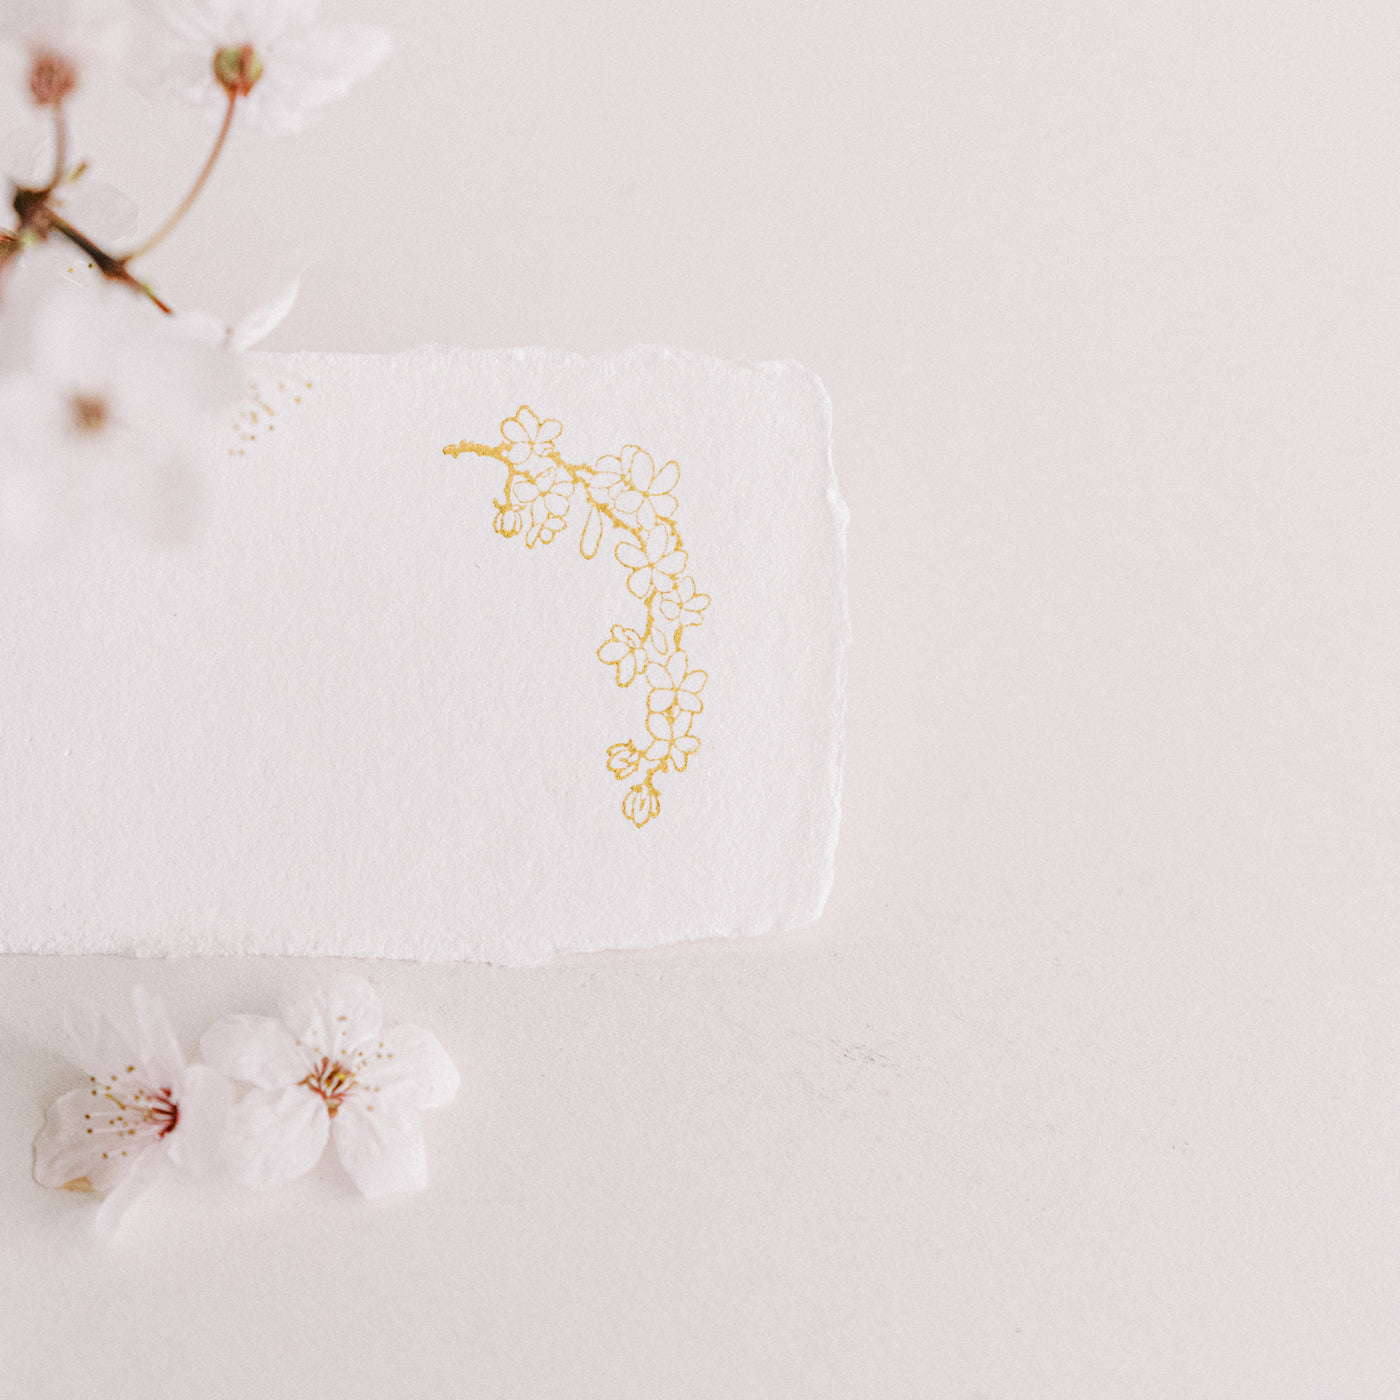 Pink Pearl Cherry Blossom Rubber Stamp for Fine Art Wedding Invitations | 'Sakura' Cherry Blossom Embellishments for Blush Pink Spring Wedding | Heirloom Seals